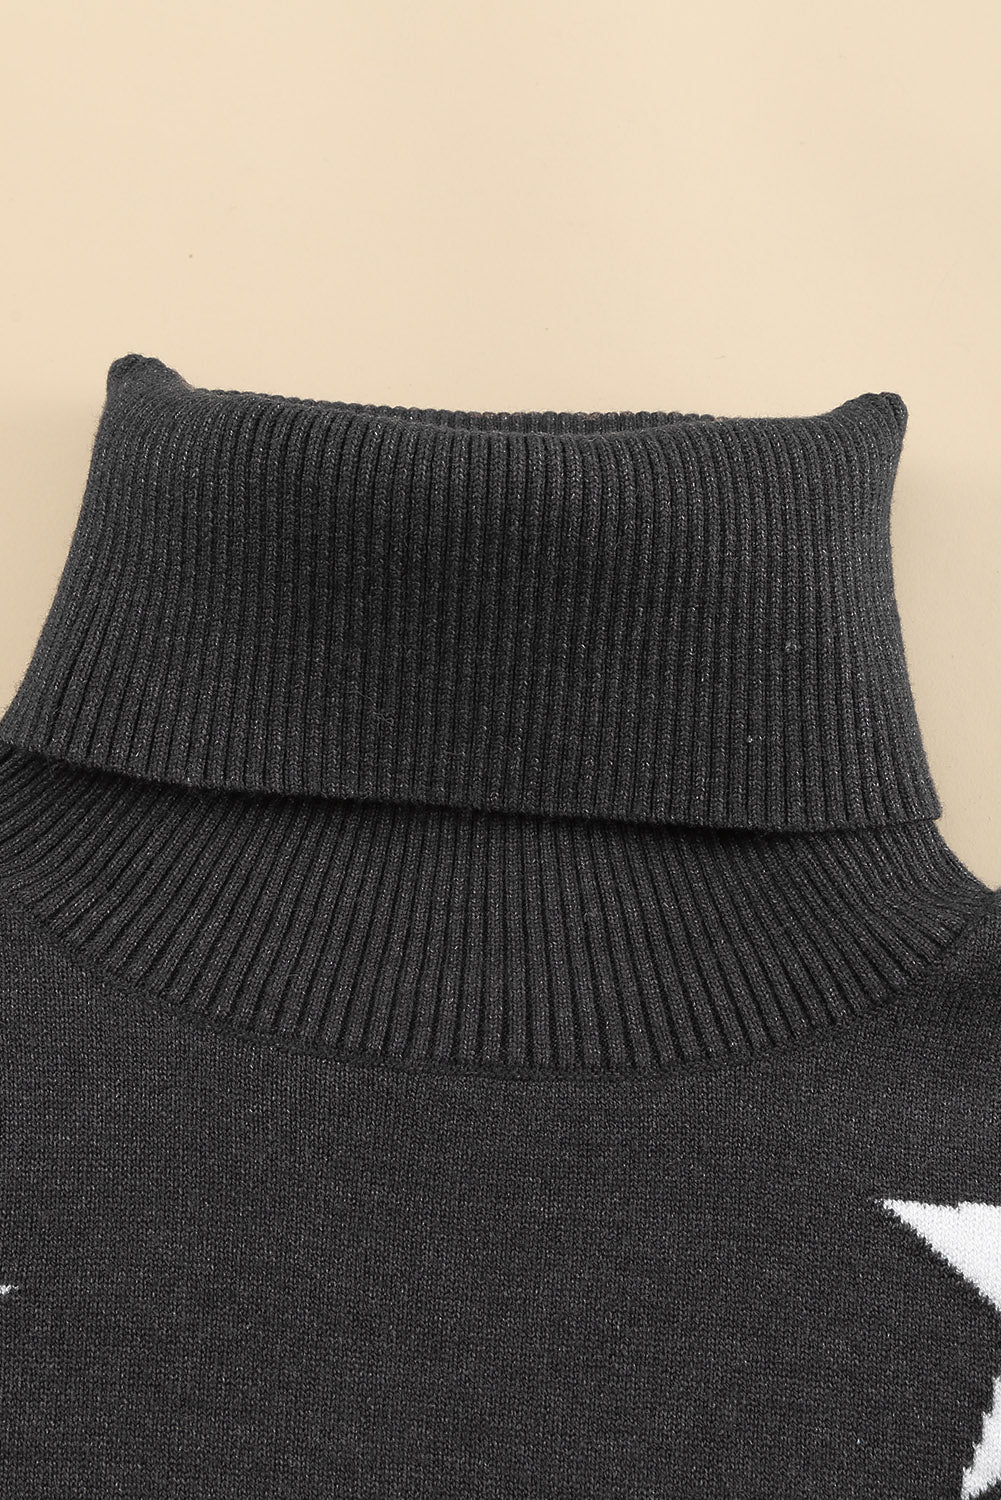 Turtleneck Star Print Sweater